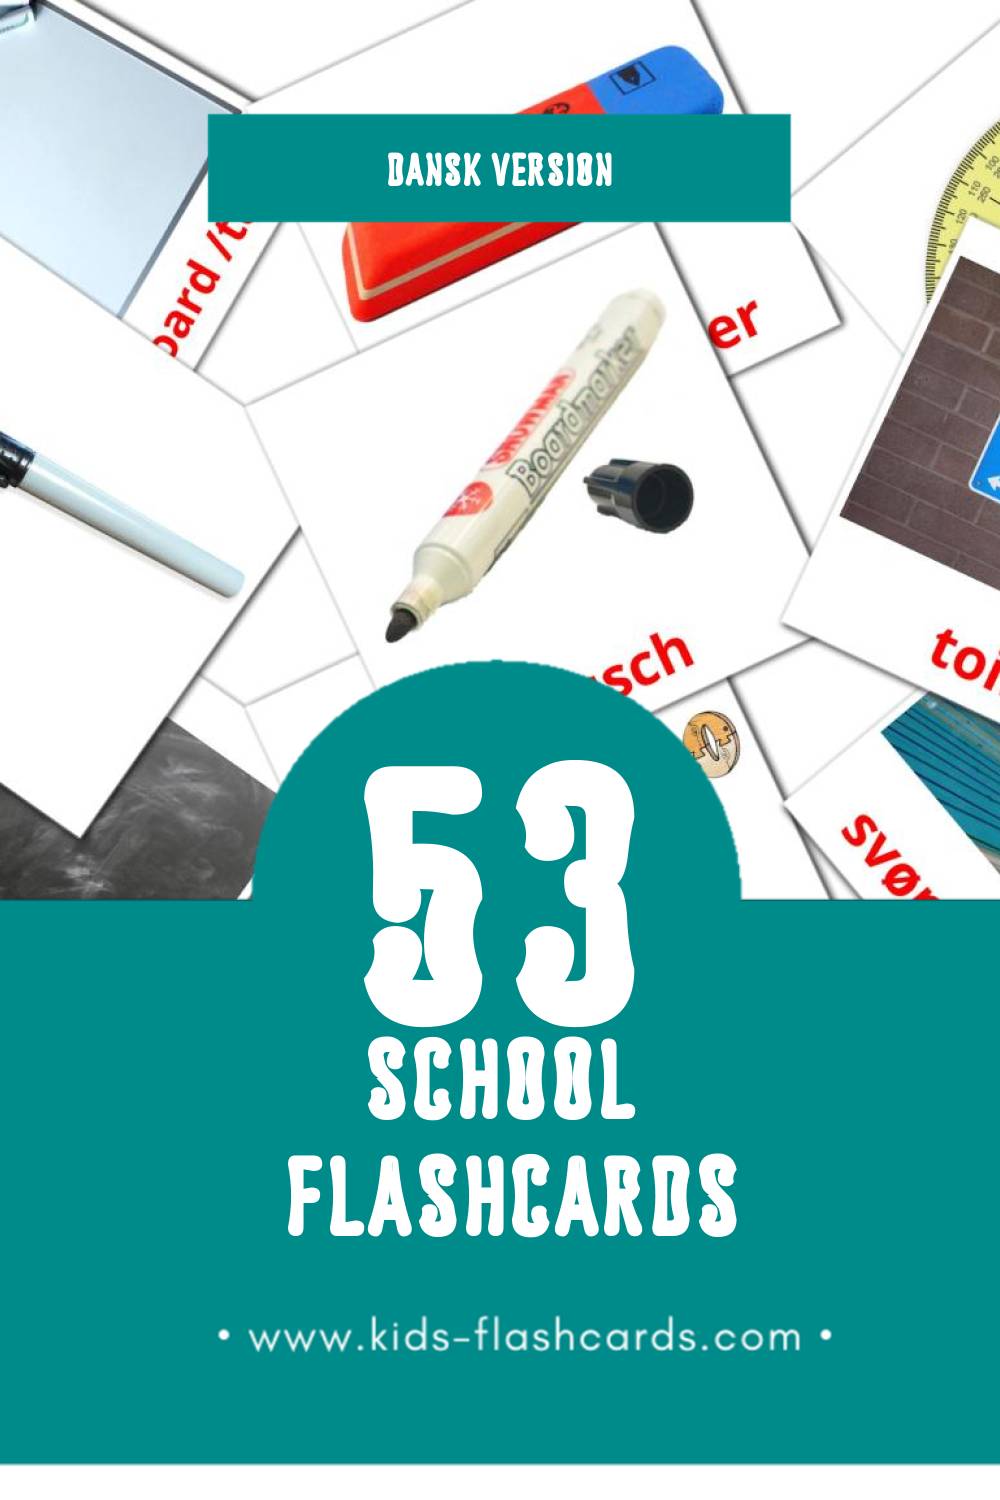 Visual Skole Flashcards for Toddlers (53 cards in Dansk)